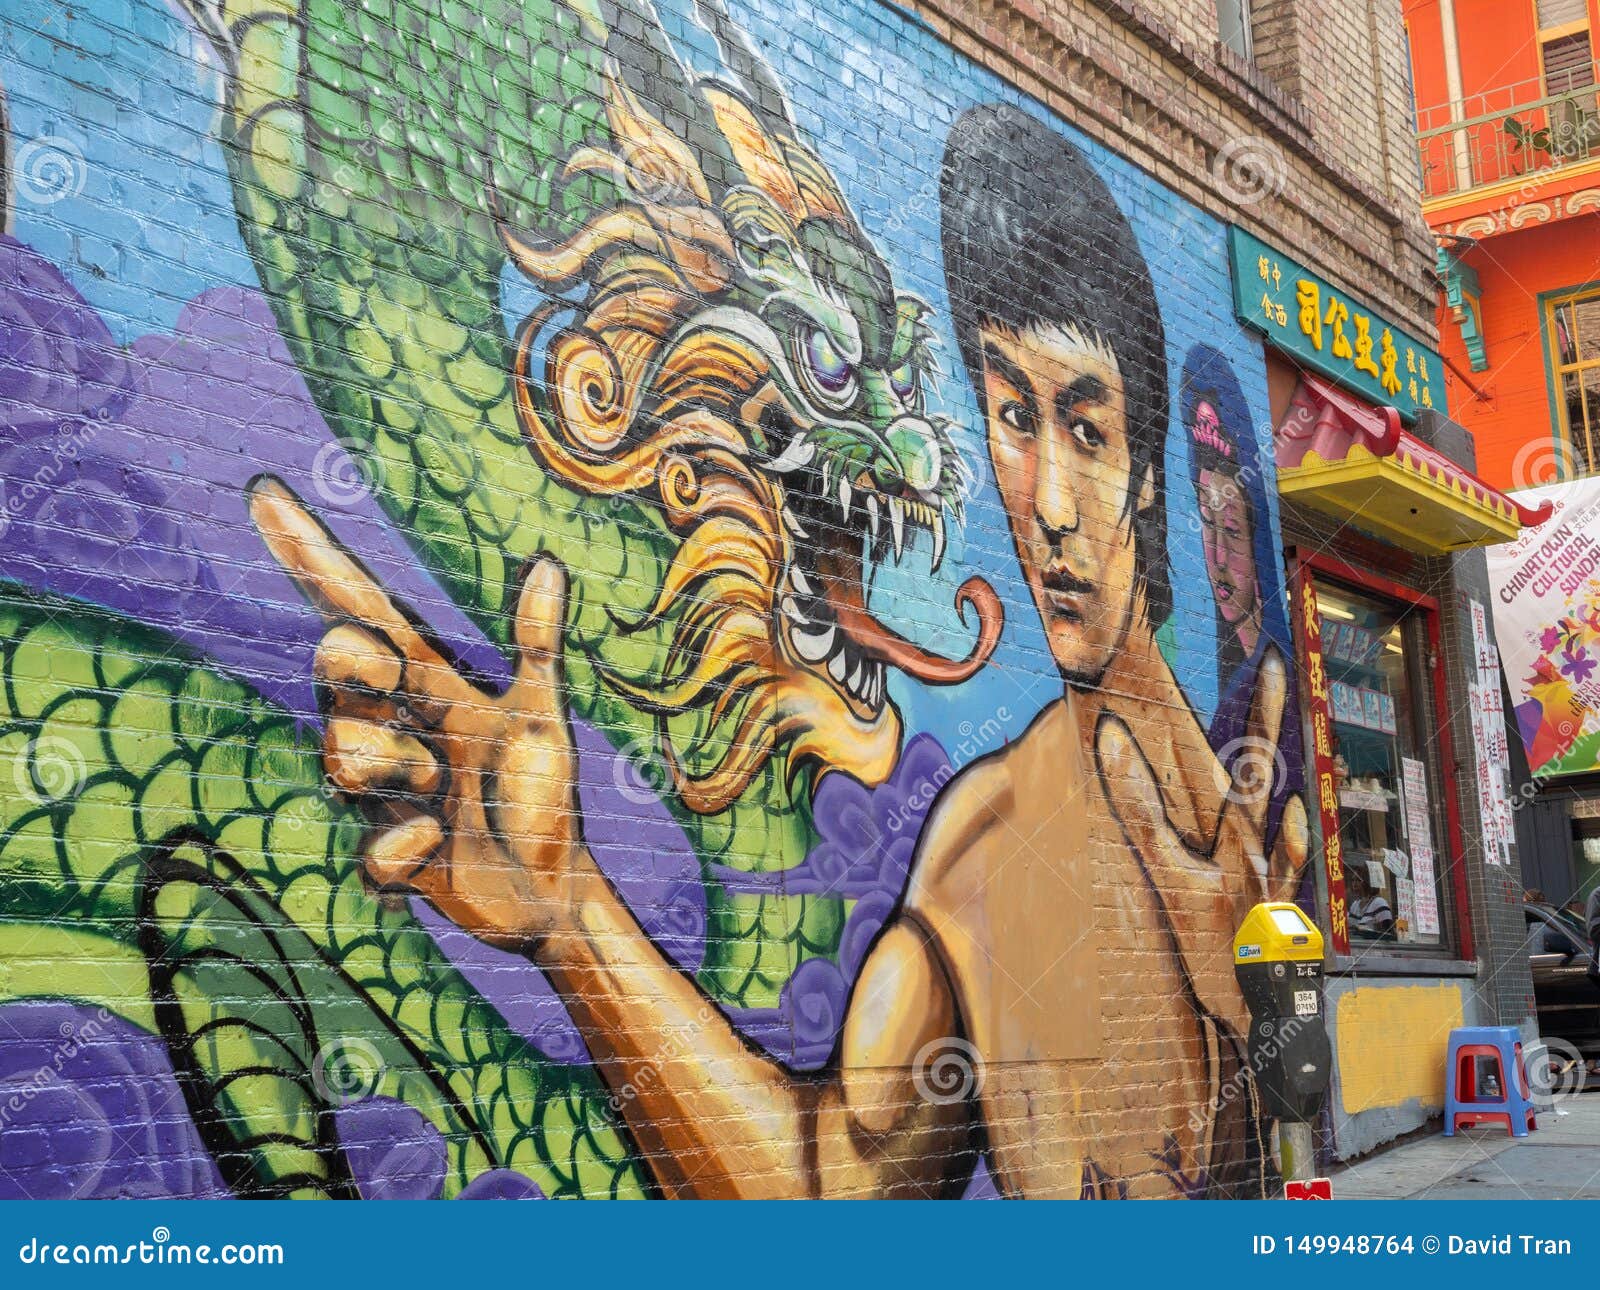 Bruce Lee Dragon Mural In Chinatown San Francisco Editorial Stock Image Image Of Hongkong Famous